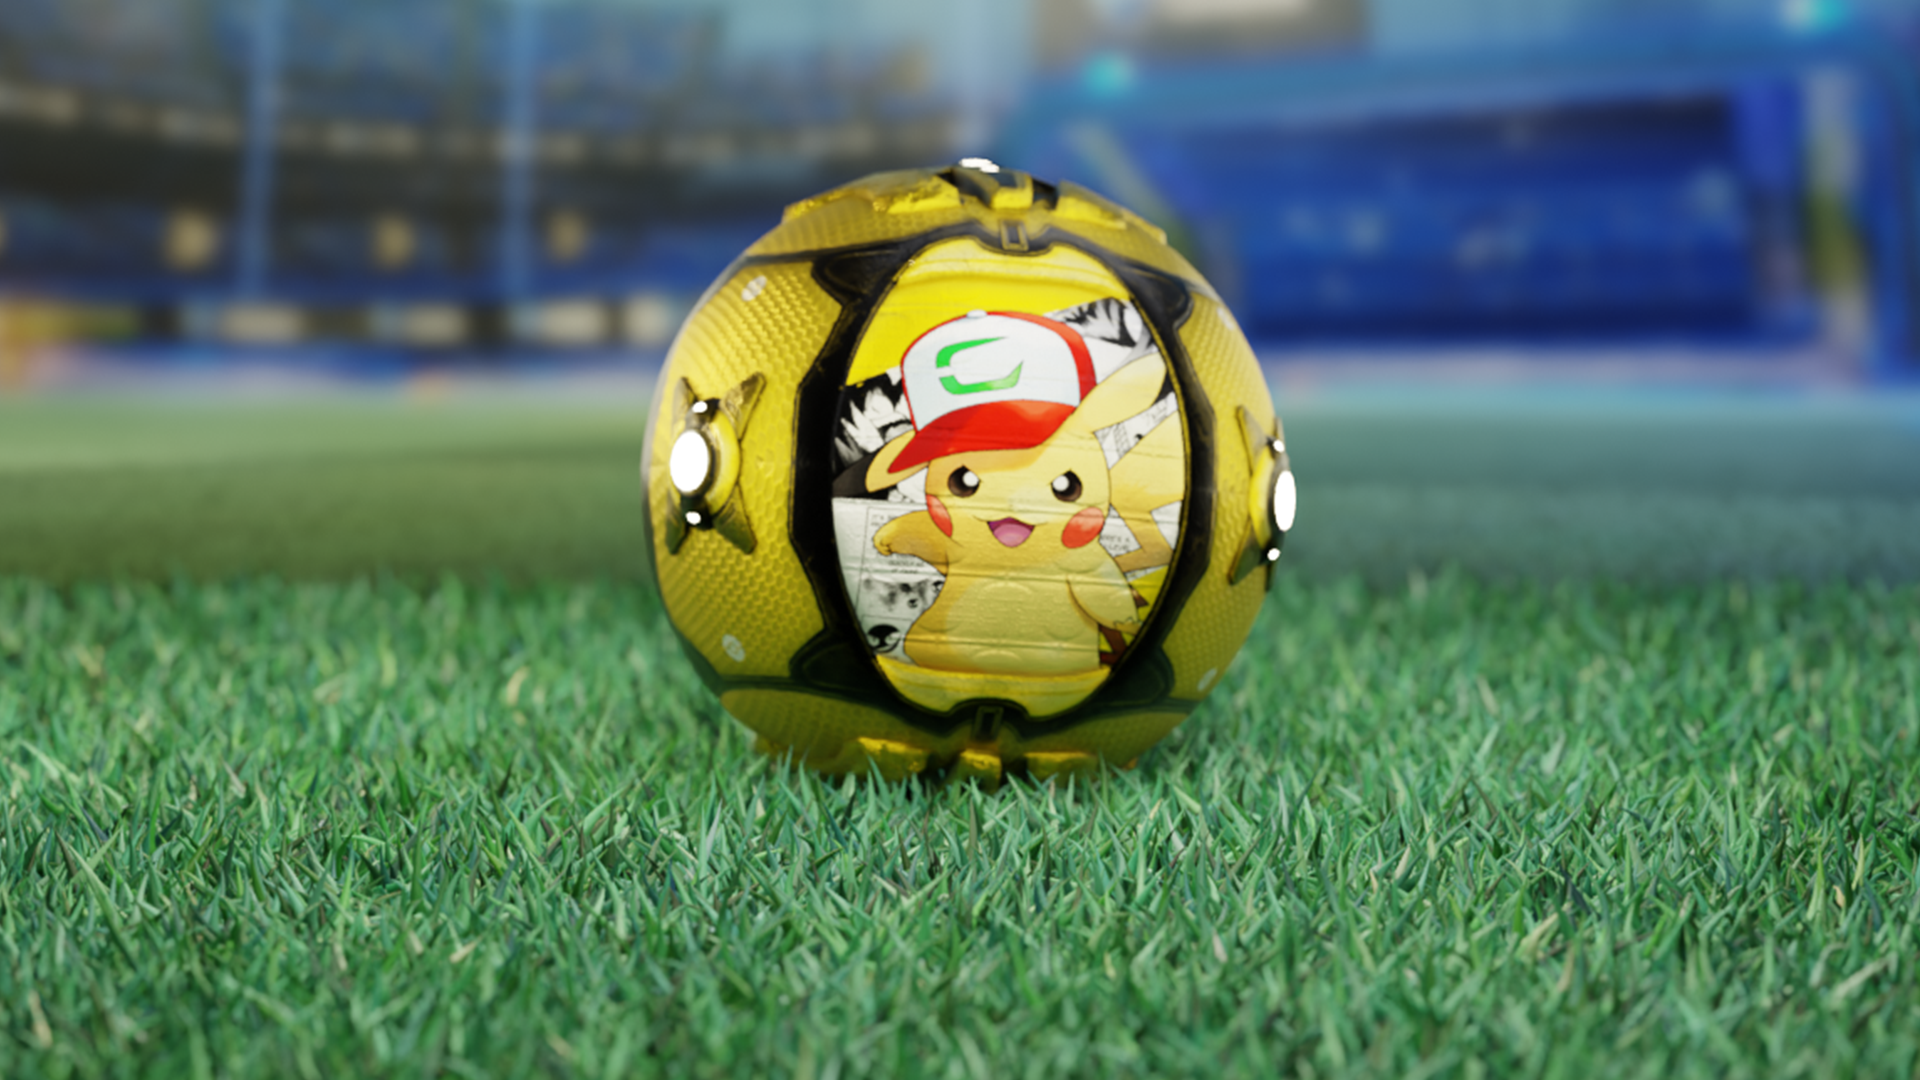 Pikachu Pokemon Ball